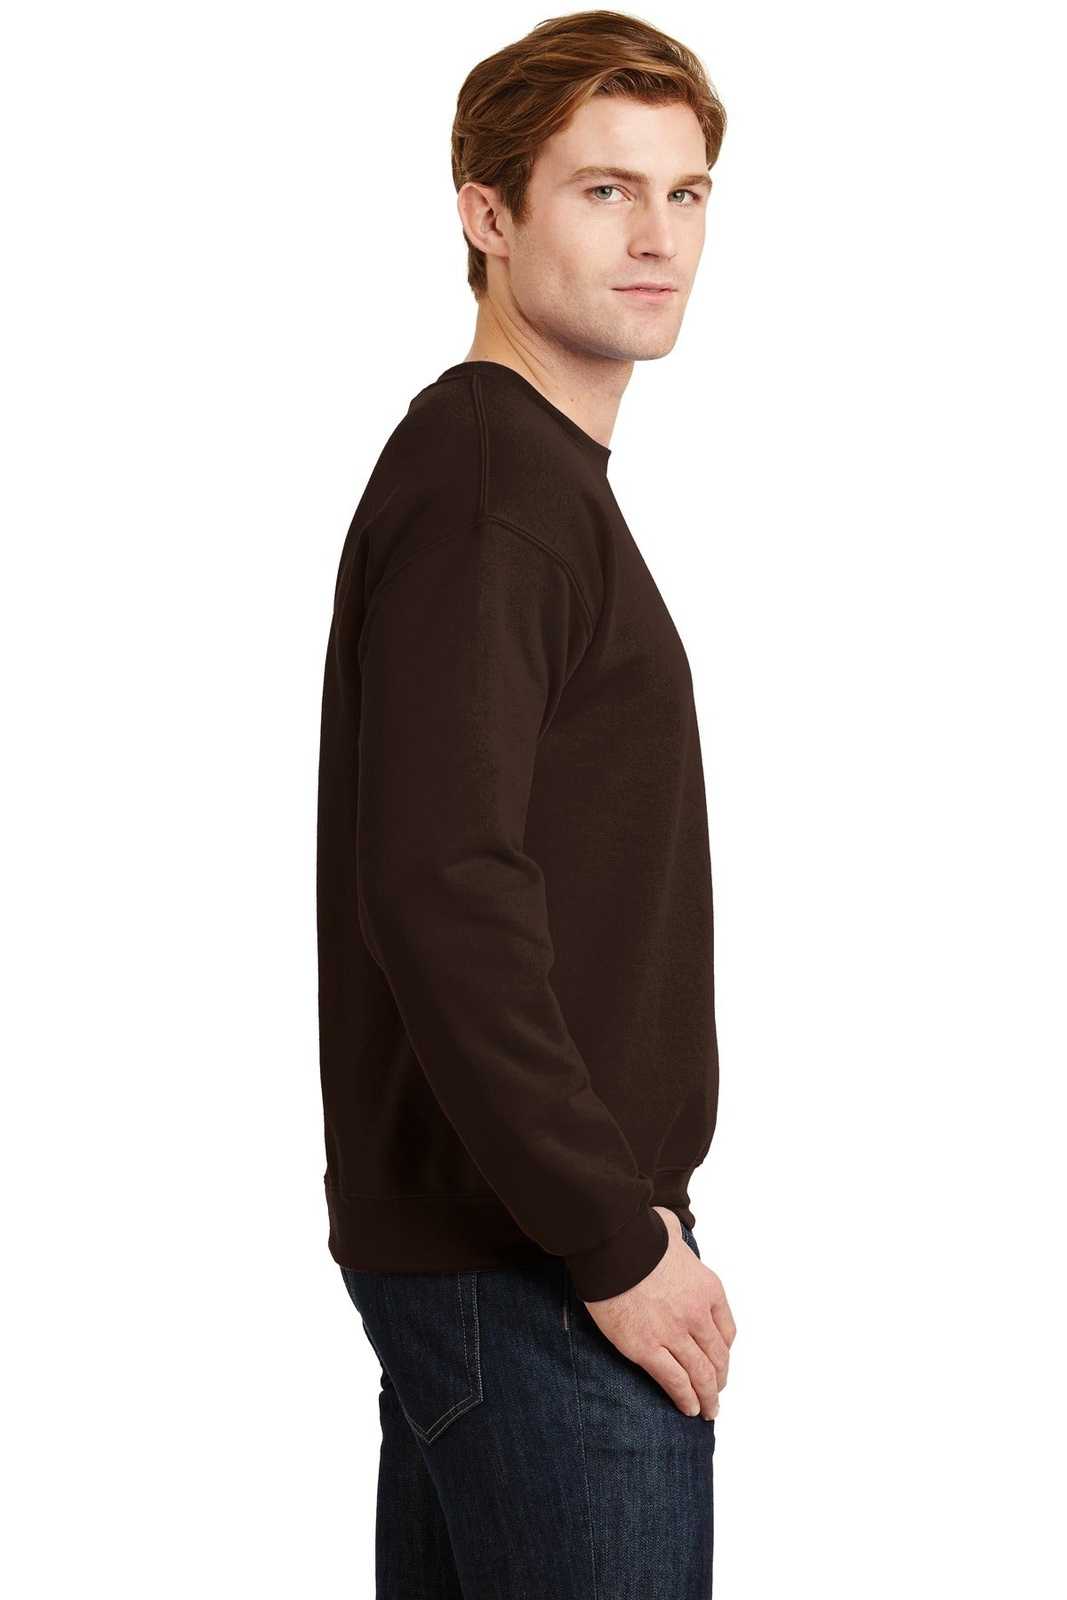 Gildan 18000 Heavy Blend Crewneck Sweatshirt - Dark Chocolate - HIT a Double